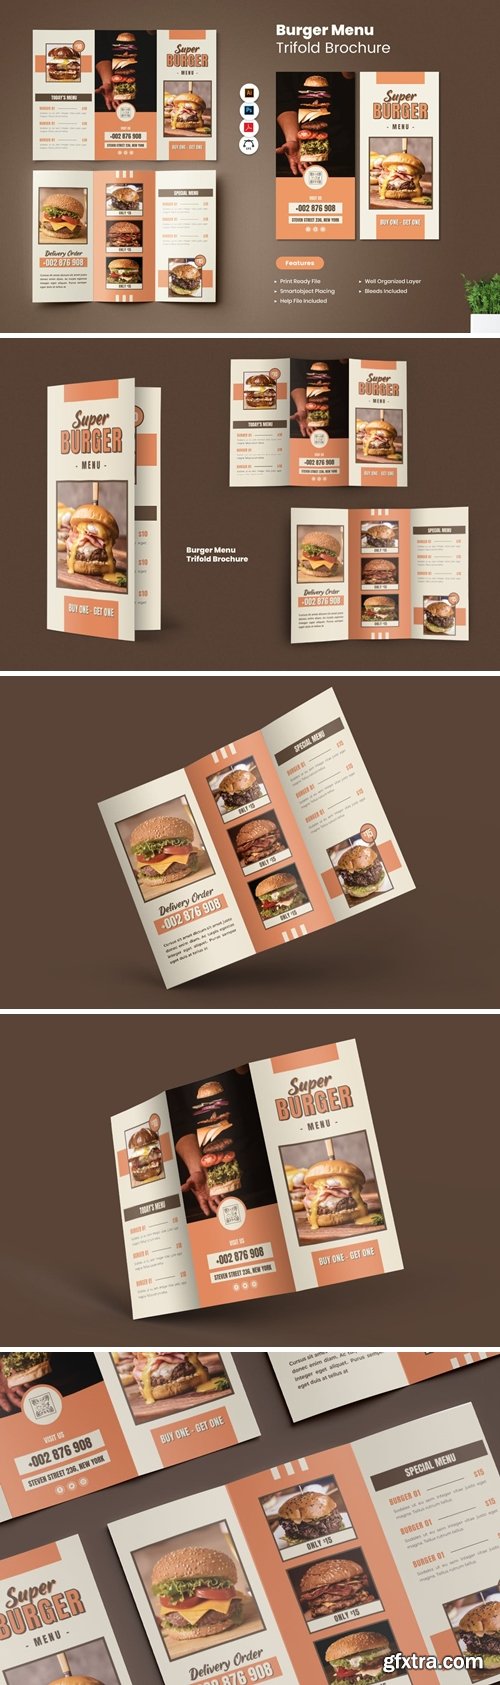 Burger Menu Trifold Brochure